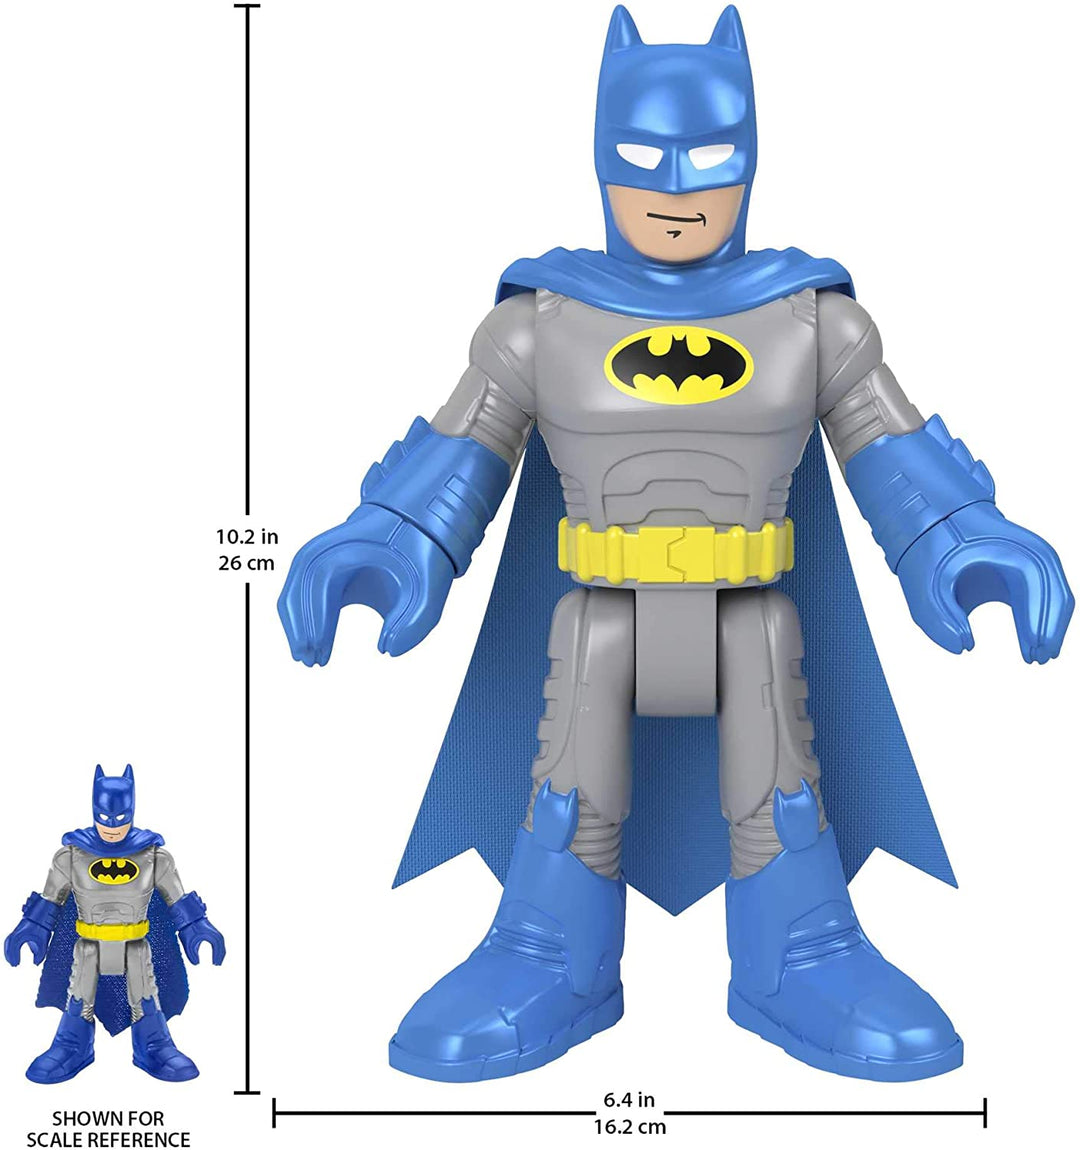 Fisher-Price Imaginext DC Super Friends Batman XL-Bleu